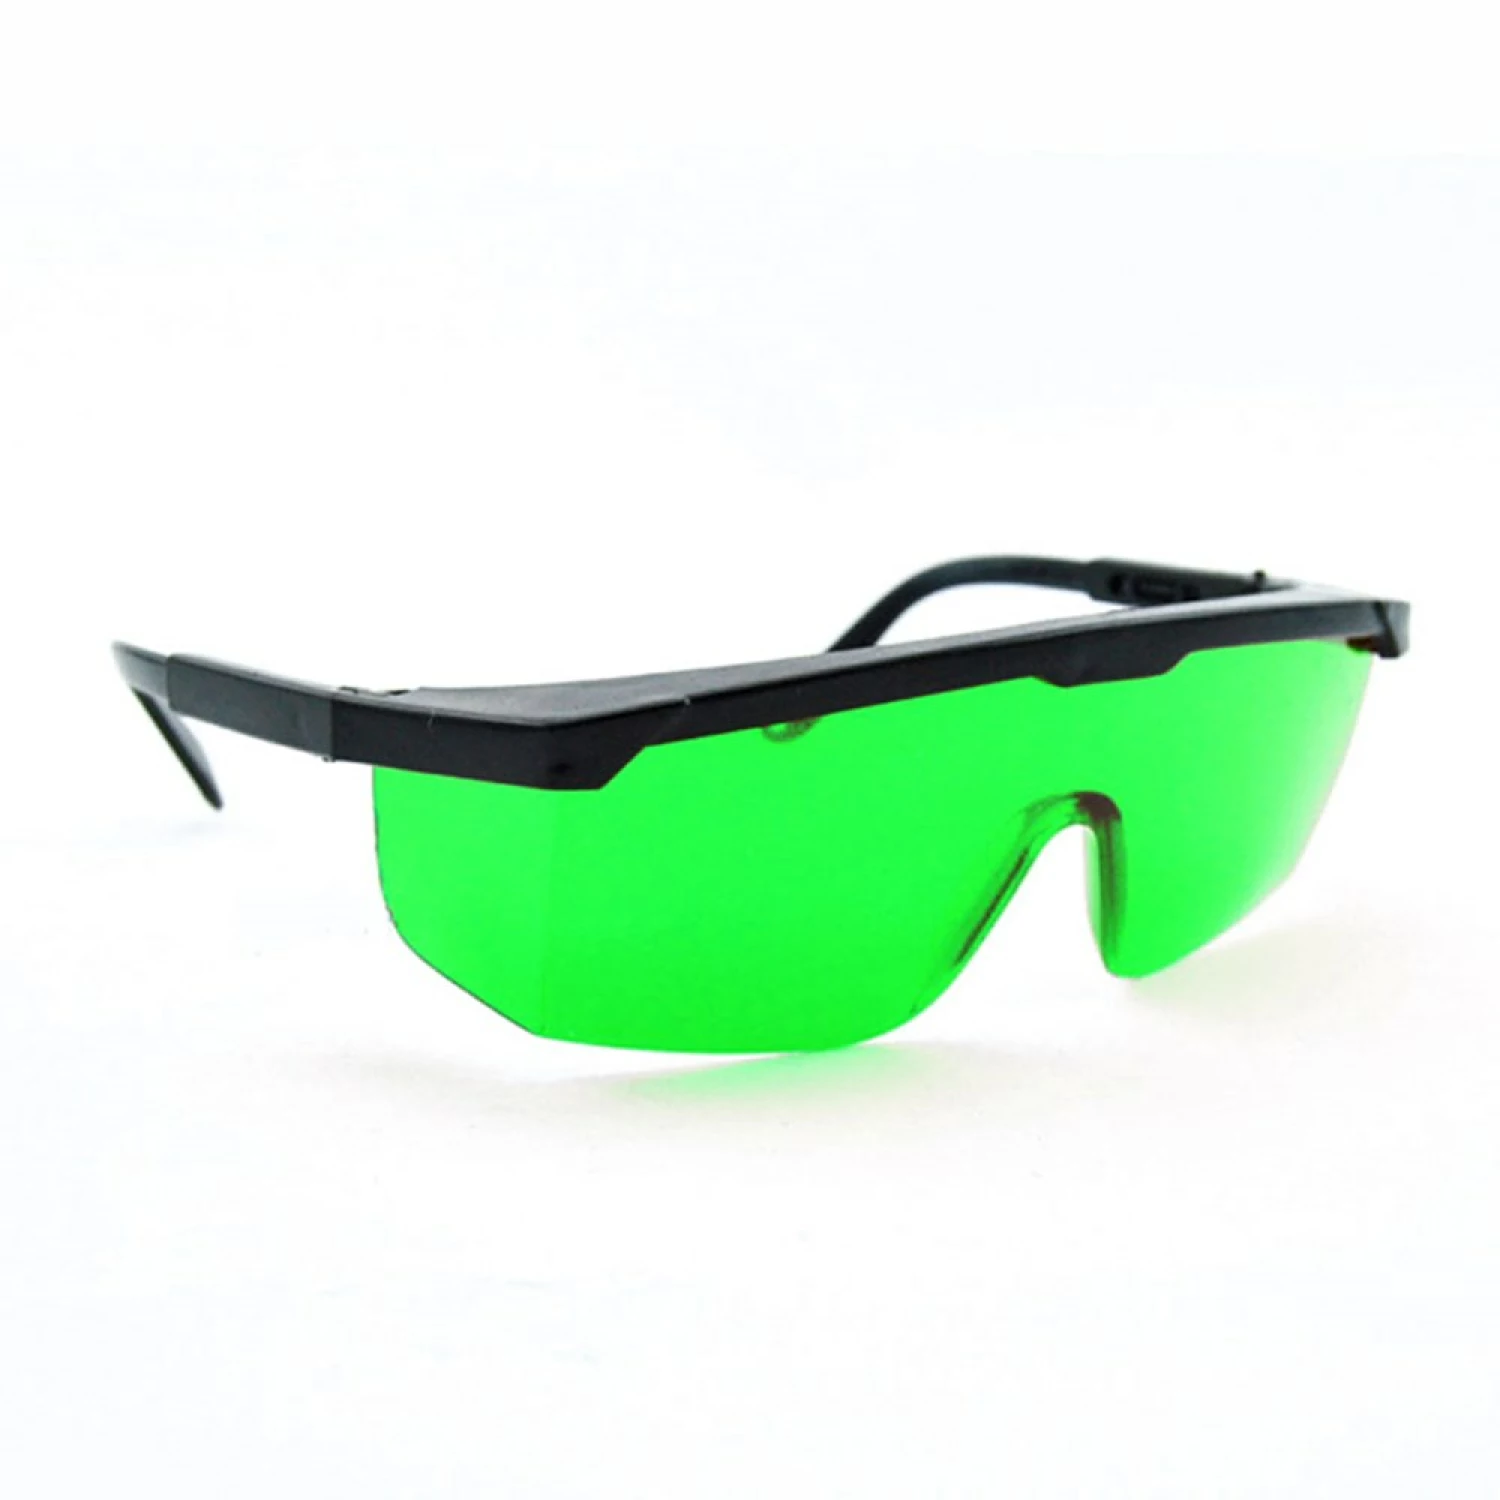 Levelfix Laserbril groen